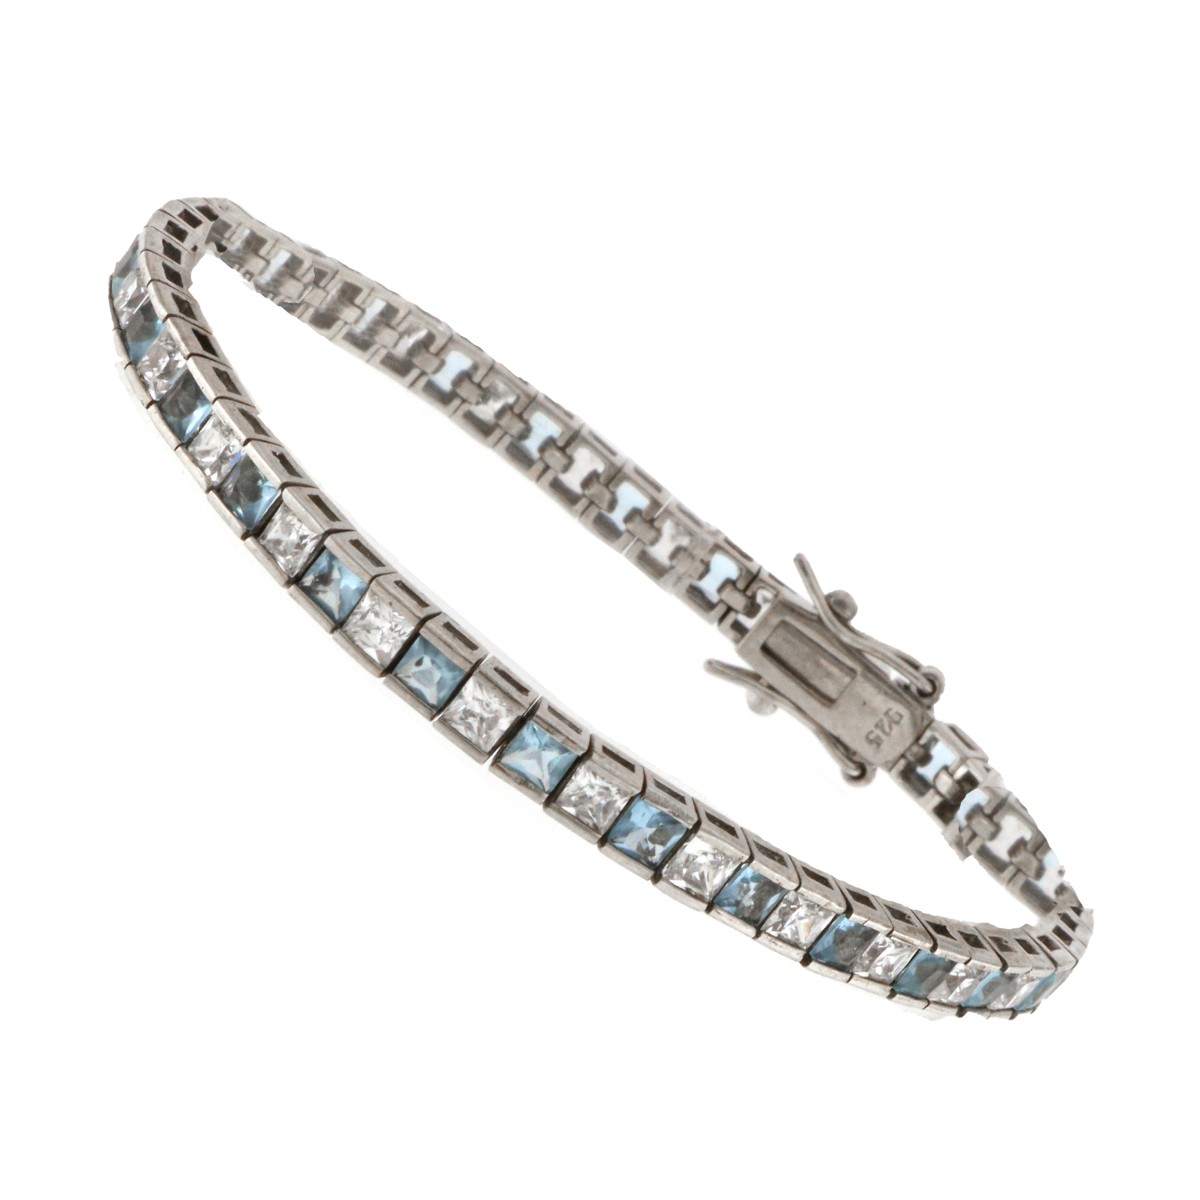 925 Sterling Silver Bracelet (Rhodium Plated)